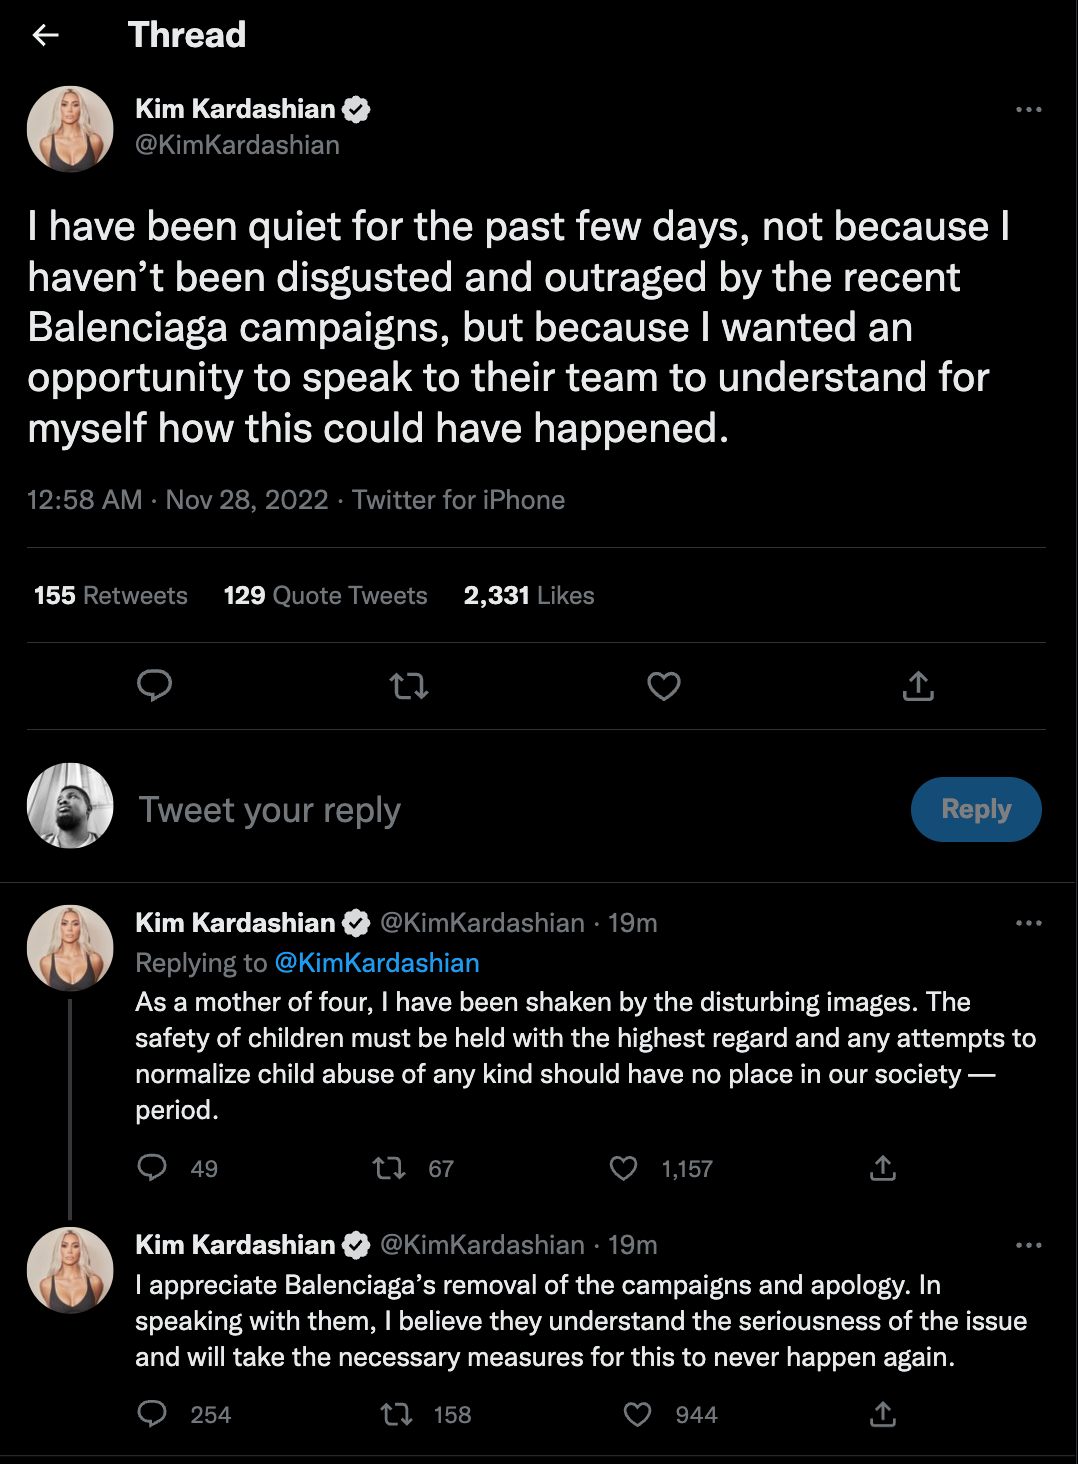 Kim Kardashian's post on her Twitter page